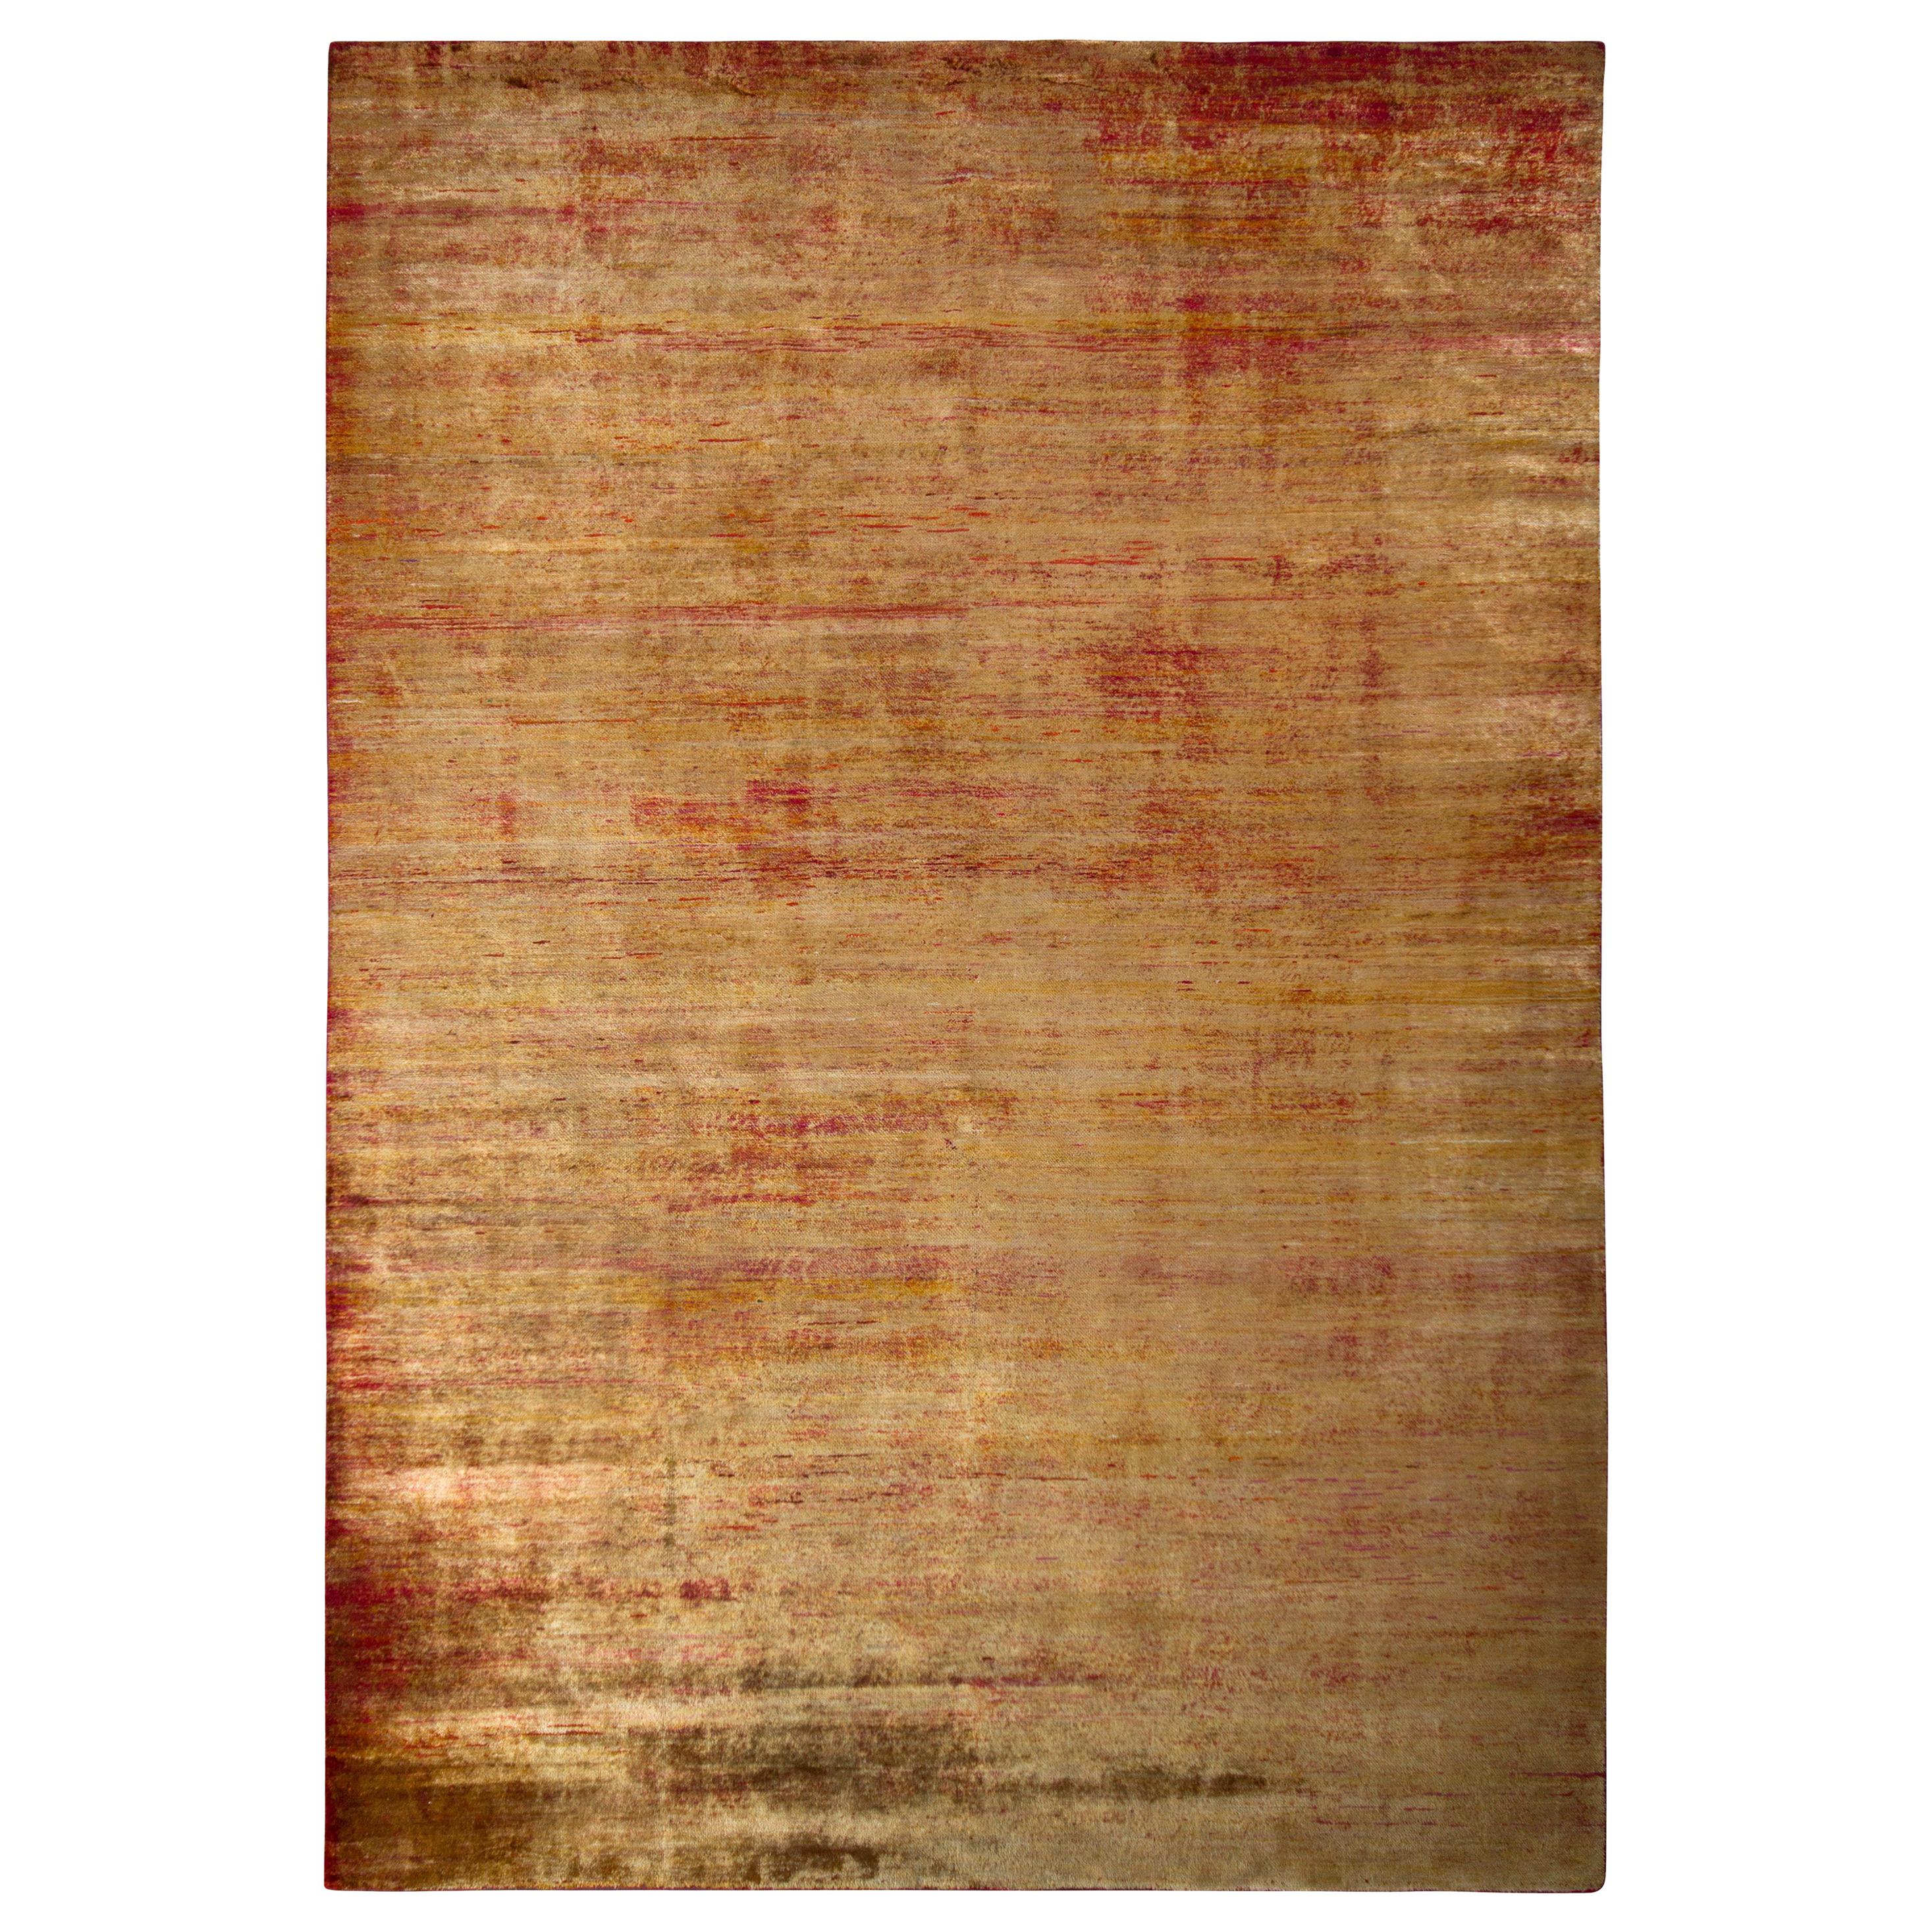 Rug & Kilim's Handmade Modern Rug Gold and Red Abrashed Striped Pattern